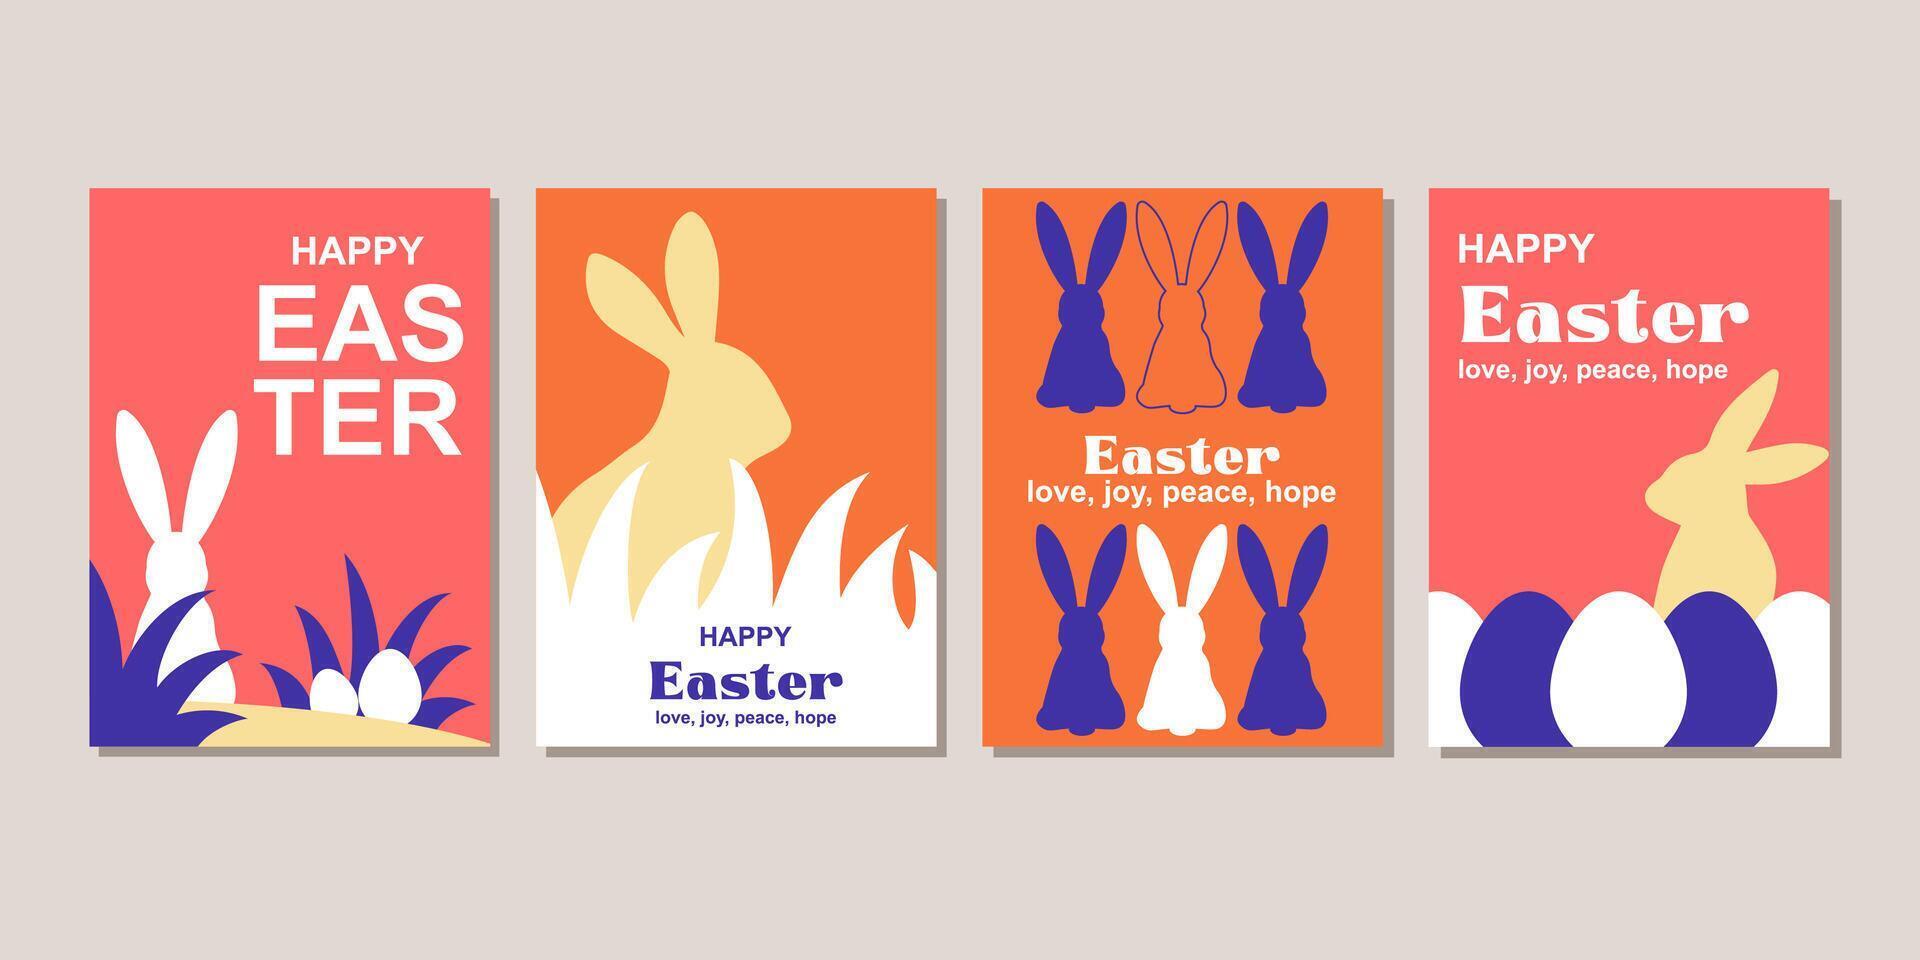 contento Pascua de Resurrección saludo tarjeta Moda comercial bandera, cubrir, social medios de comunicación con plano diseño vector